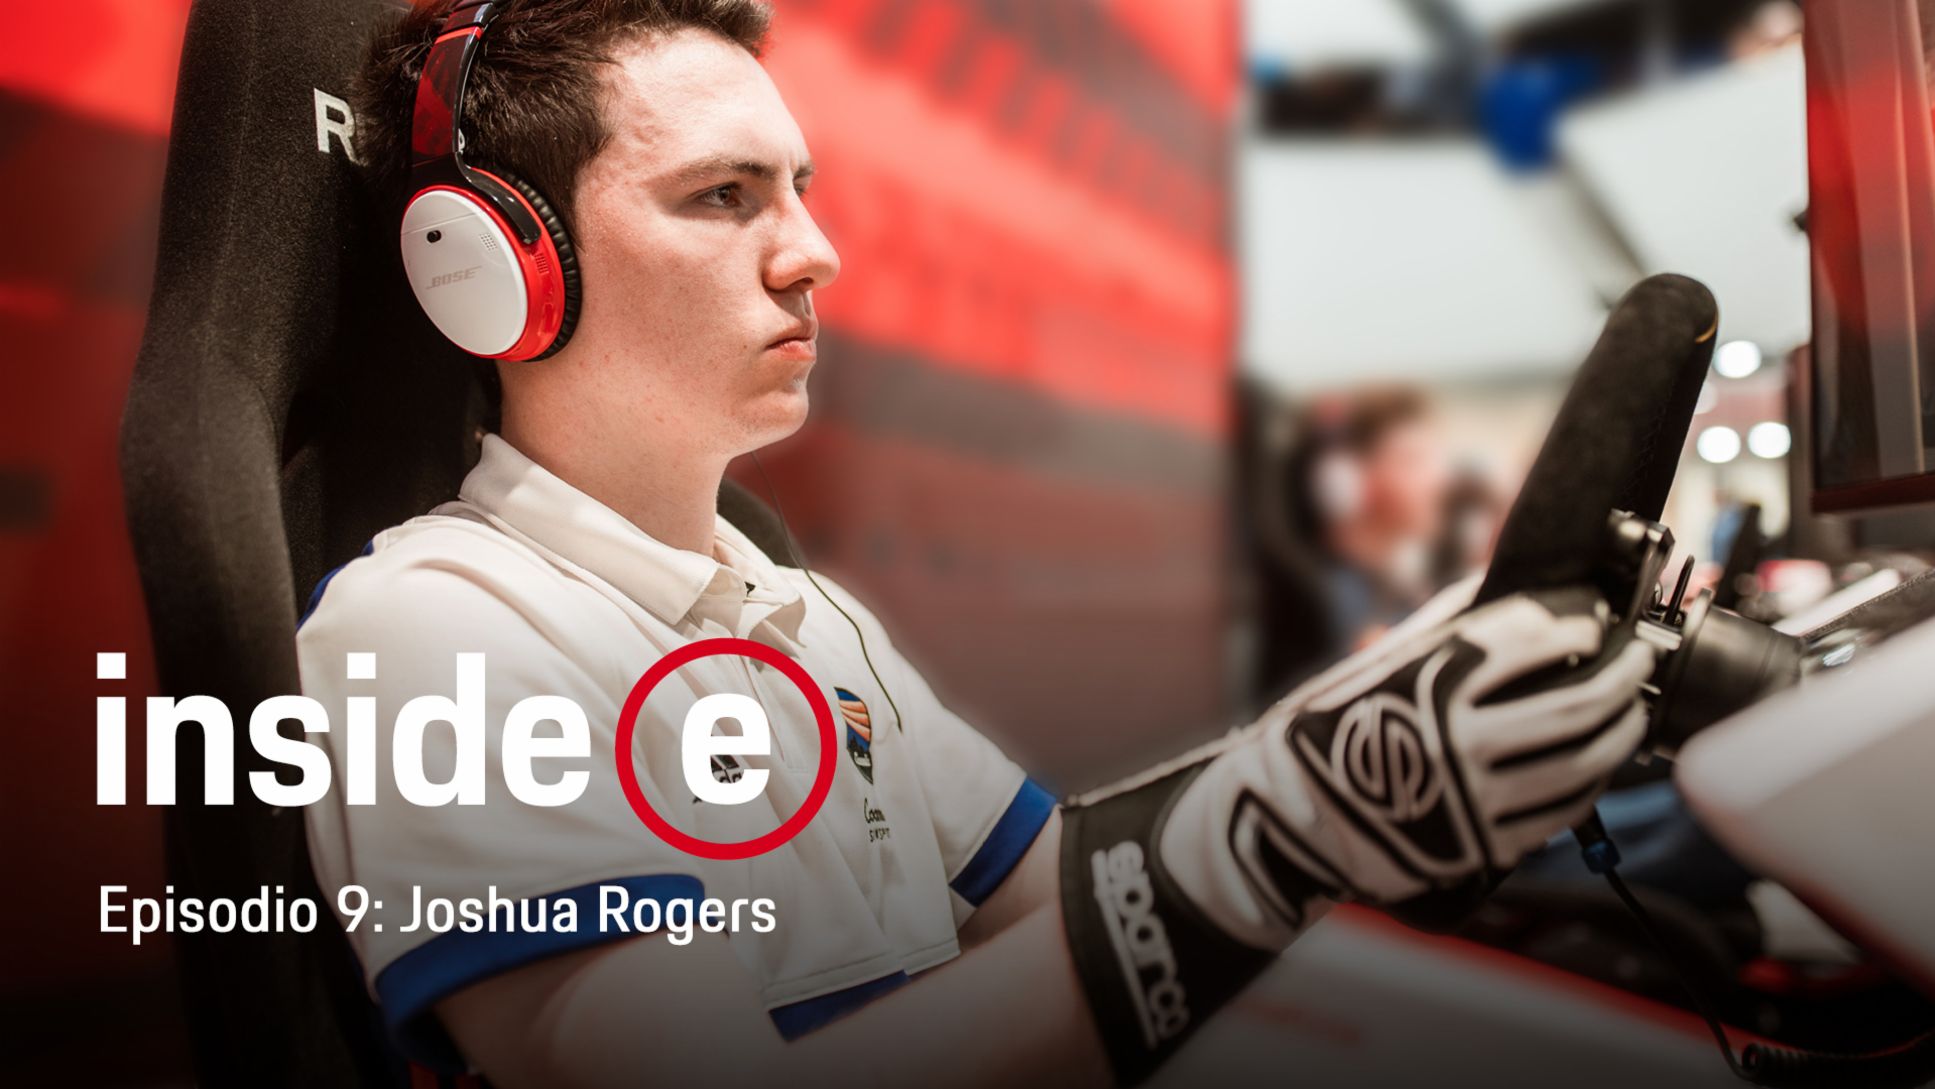  Podcast “Inside E”, episodio 9 con Joshua Rogers, 2020, Porsche AG